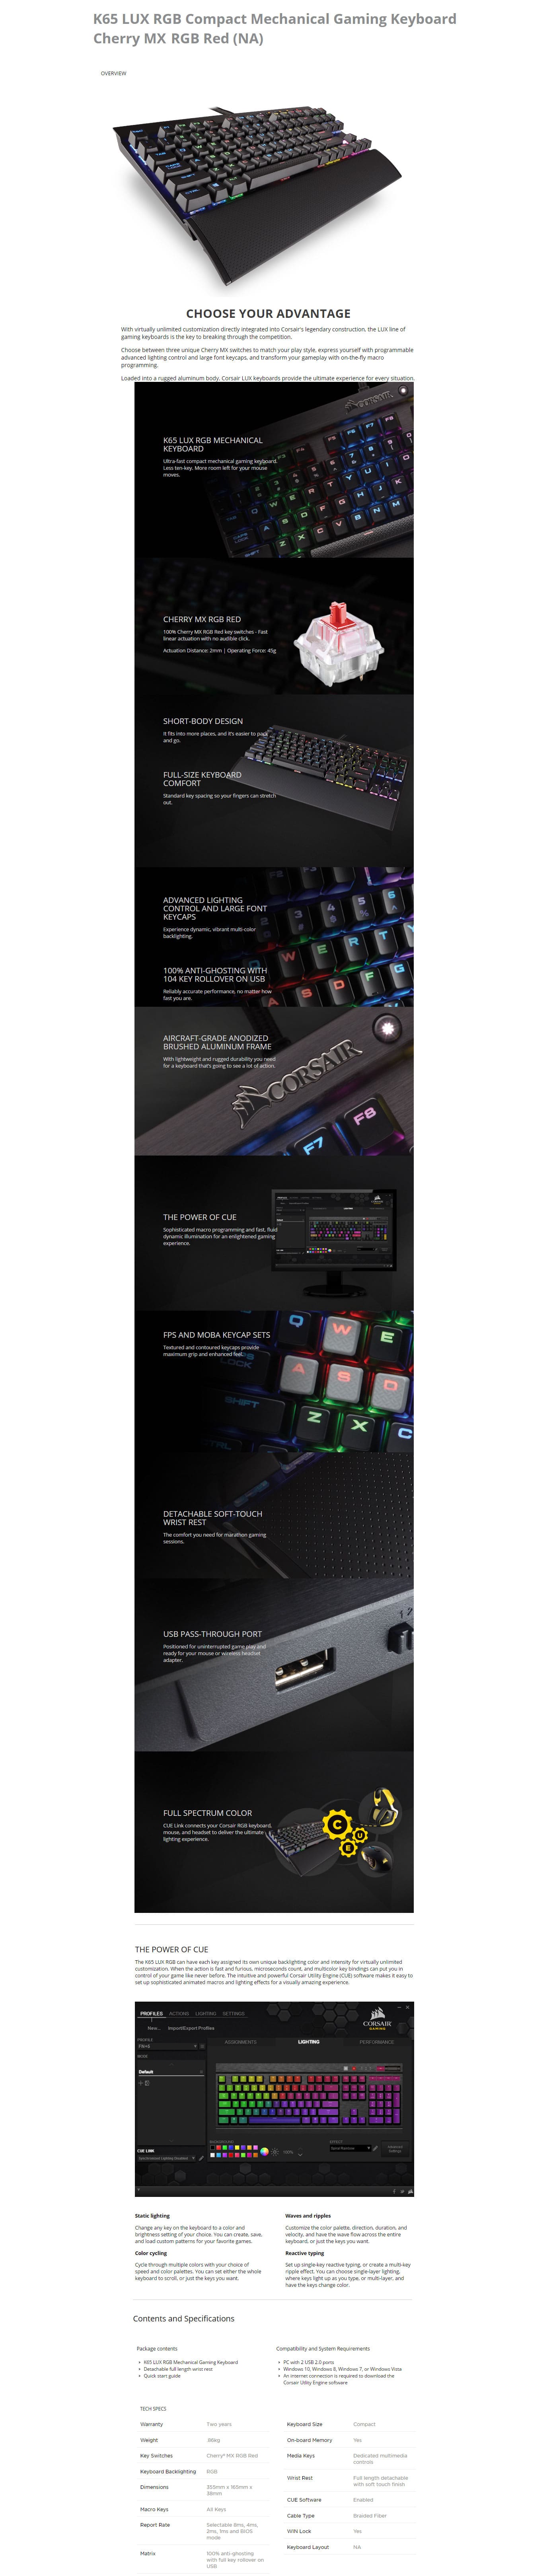 Corsair K65 LUX RGB Compact Mechanical Gaming Keyboard